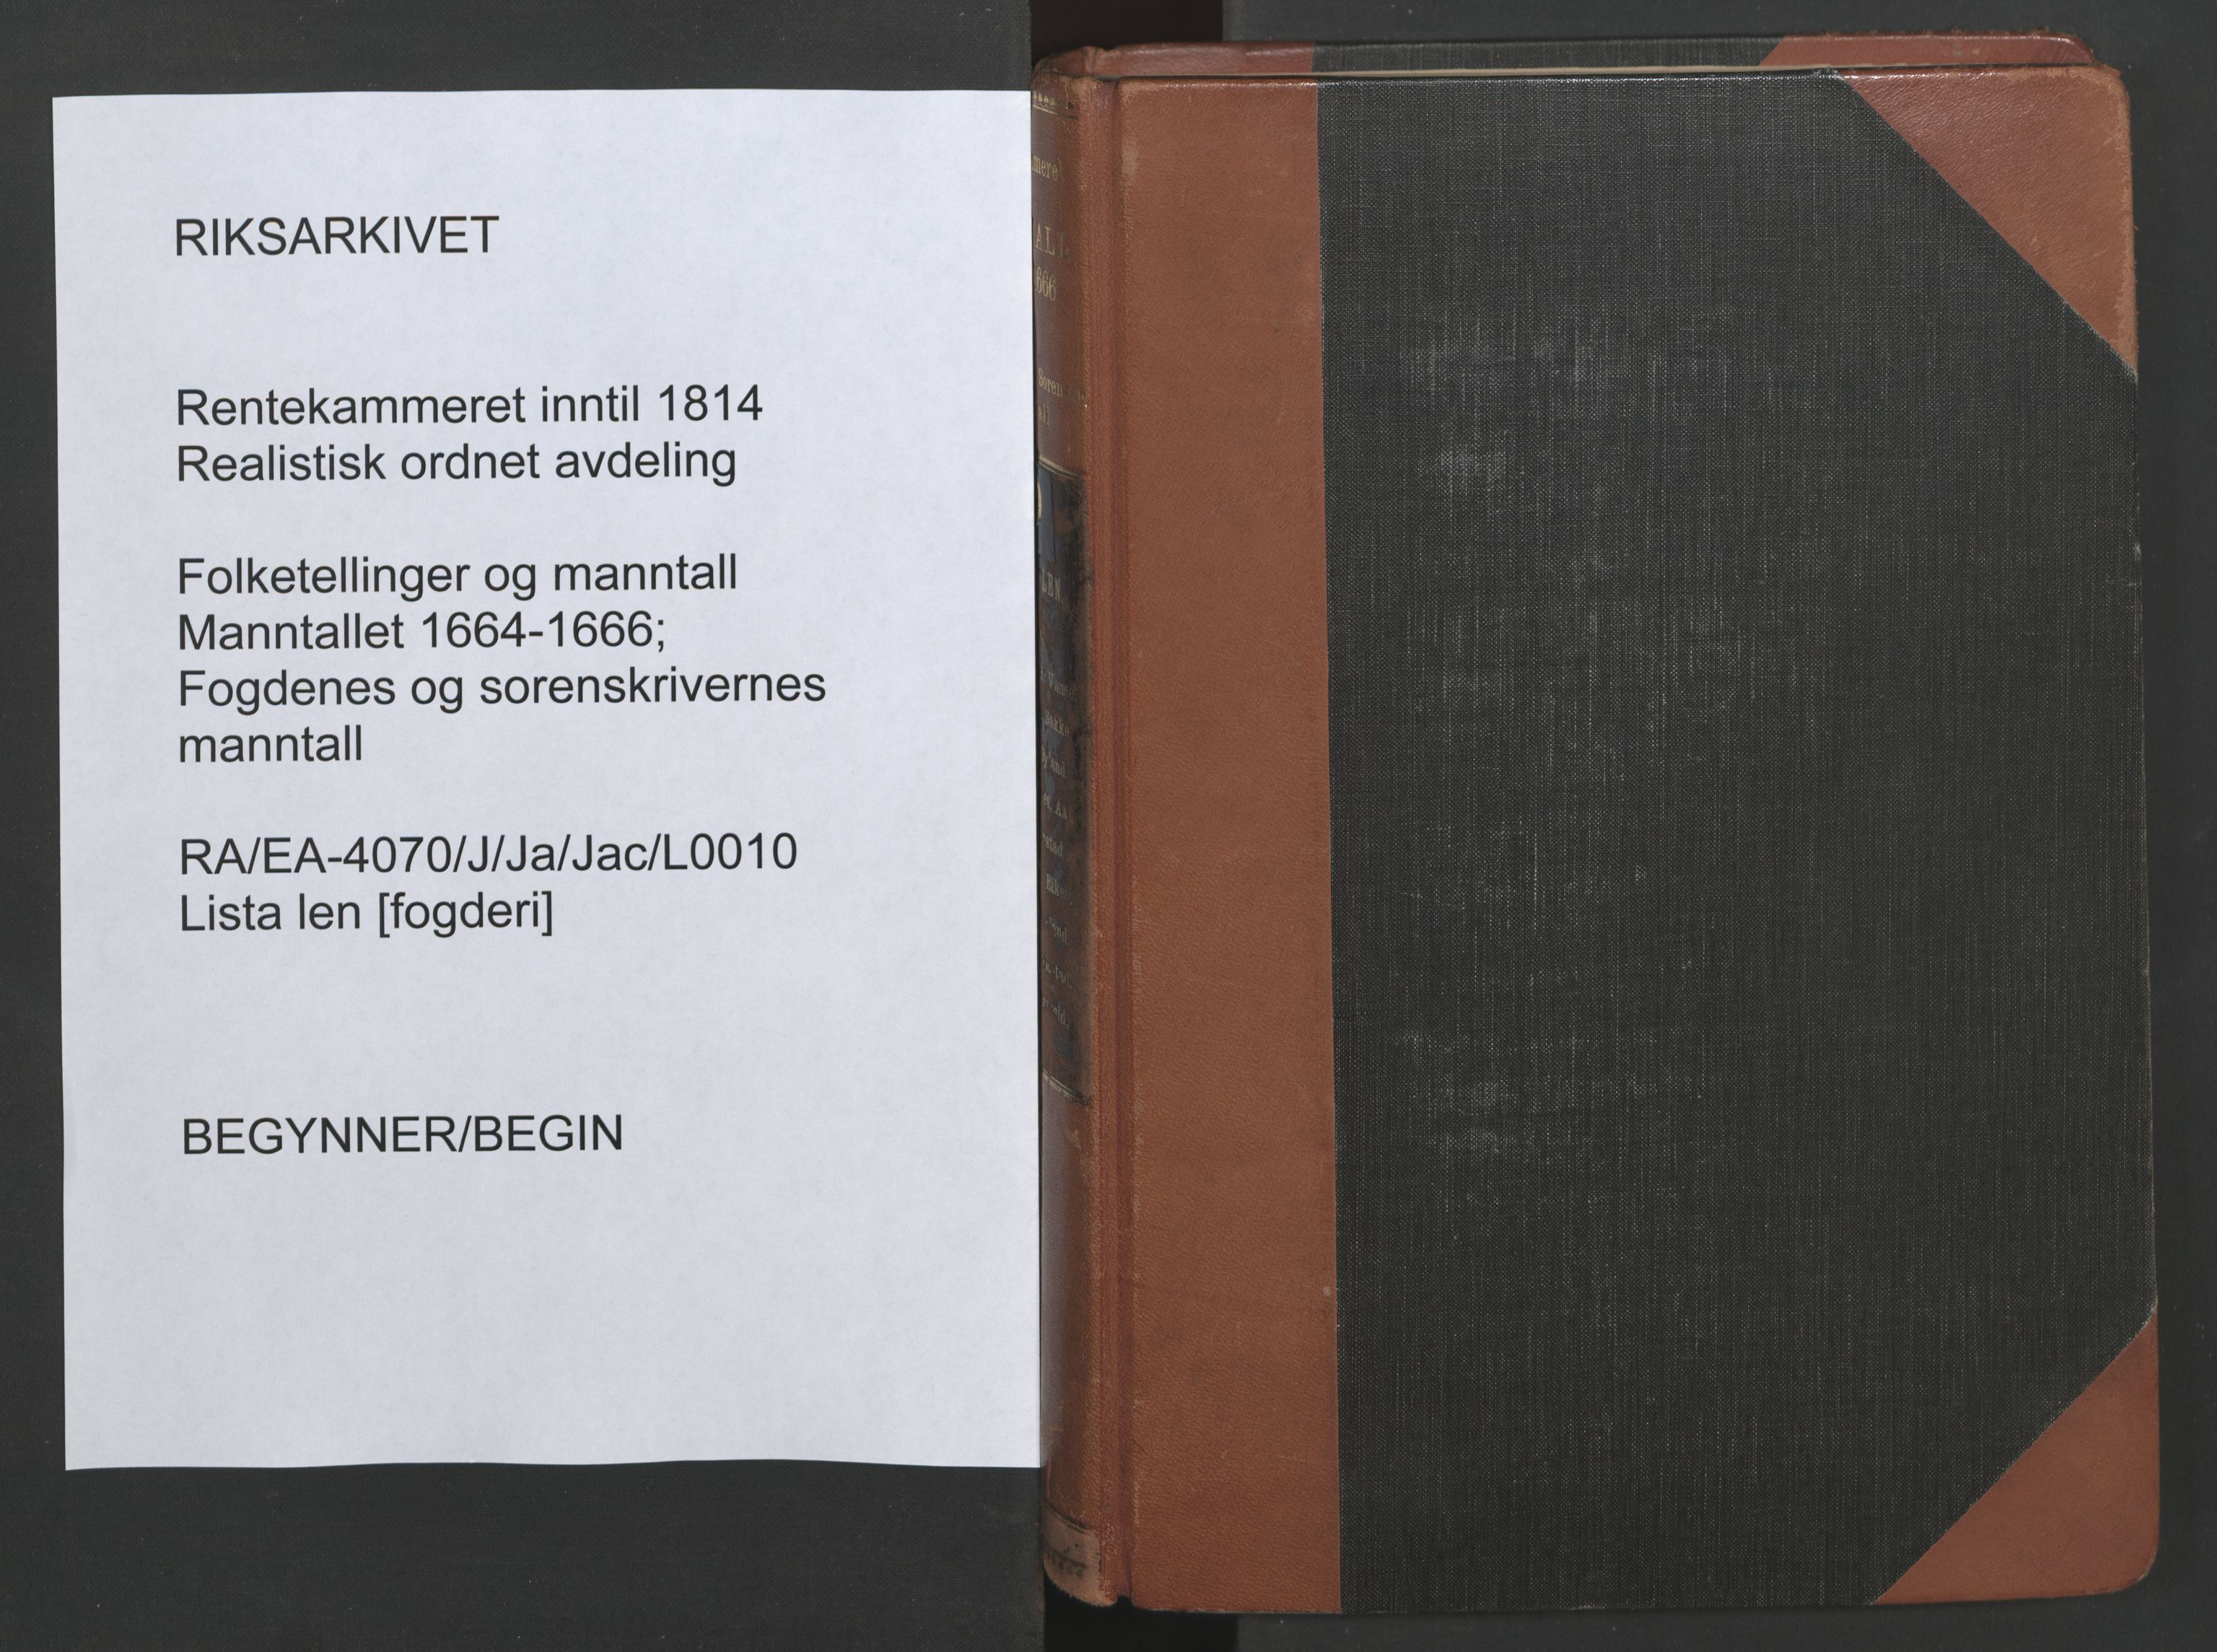 RA, Fogdenes og sorenskrivernes manntall 1664-1666, nr. 10: Lista len, 1664